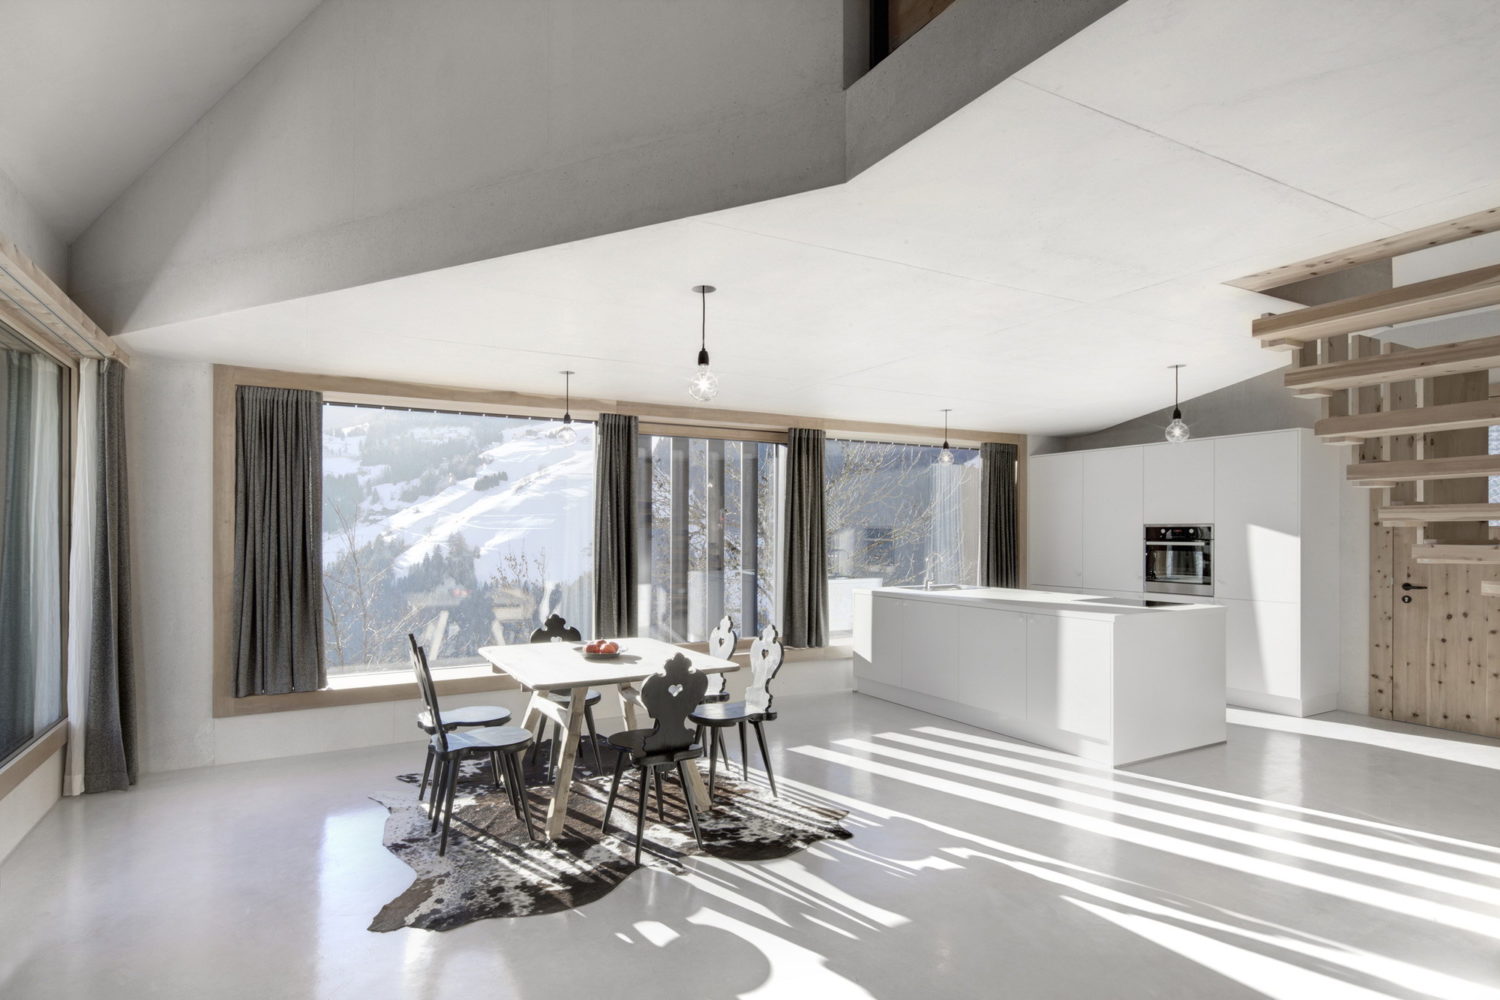 Alpine Cabins by Pedevilla Architects